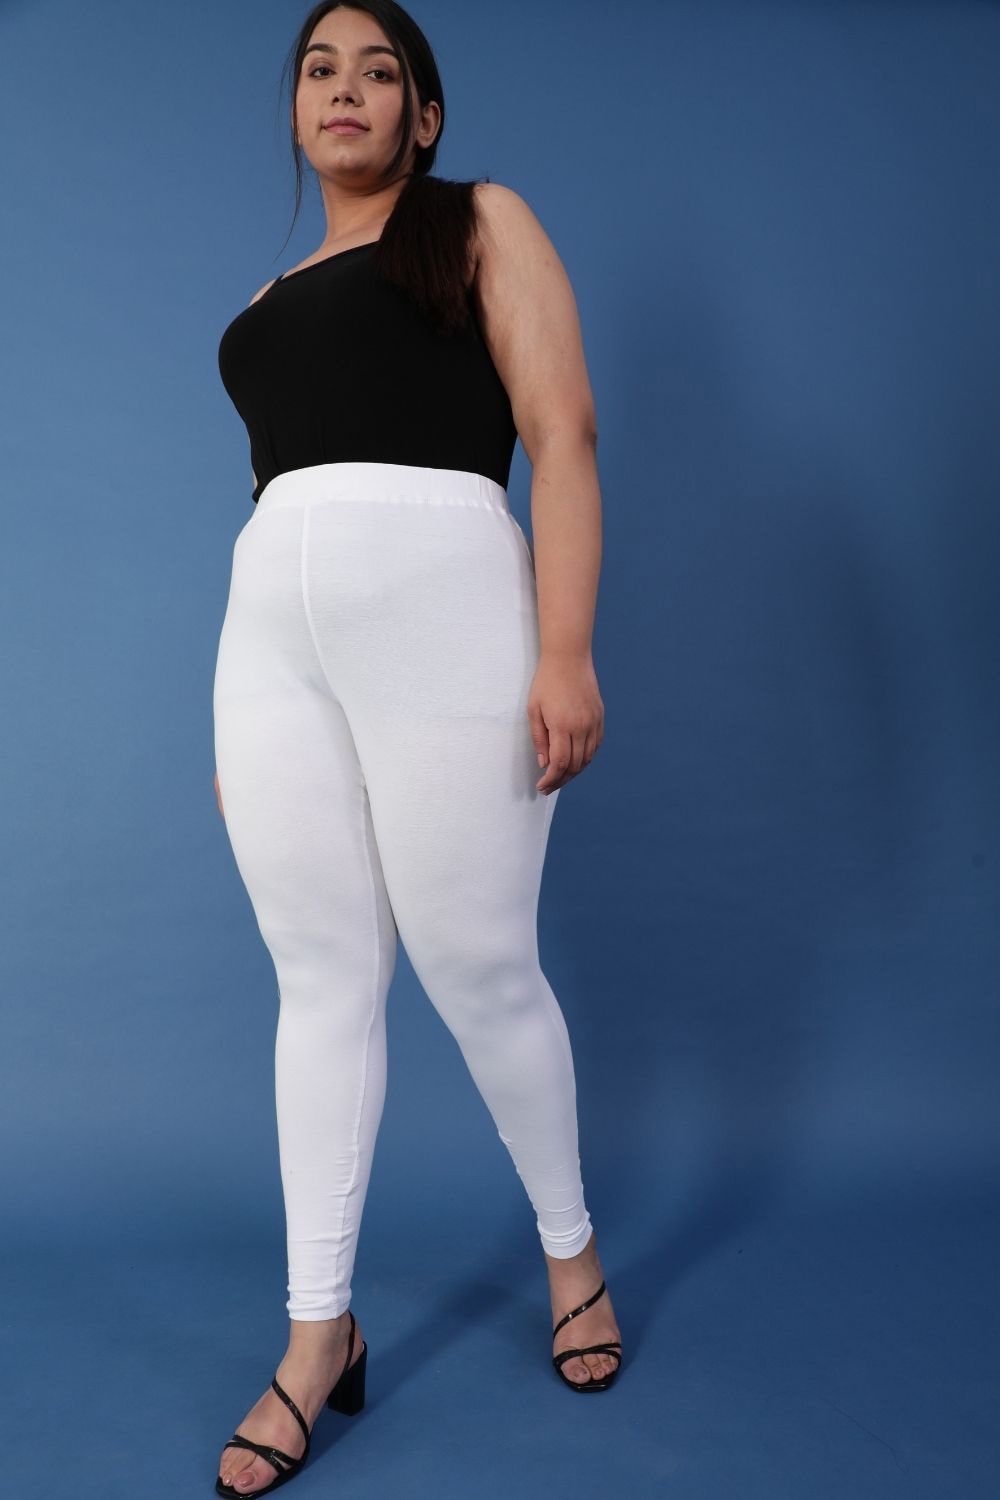 Buy White Plus Size Leggings for Women, Sizes 2XL, 3XL, 4XL, 5XL and 6XL,  Plus Size Clothing, White Yoga Pants Online in India 